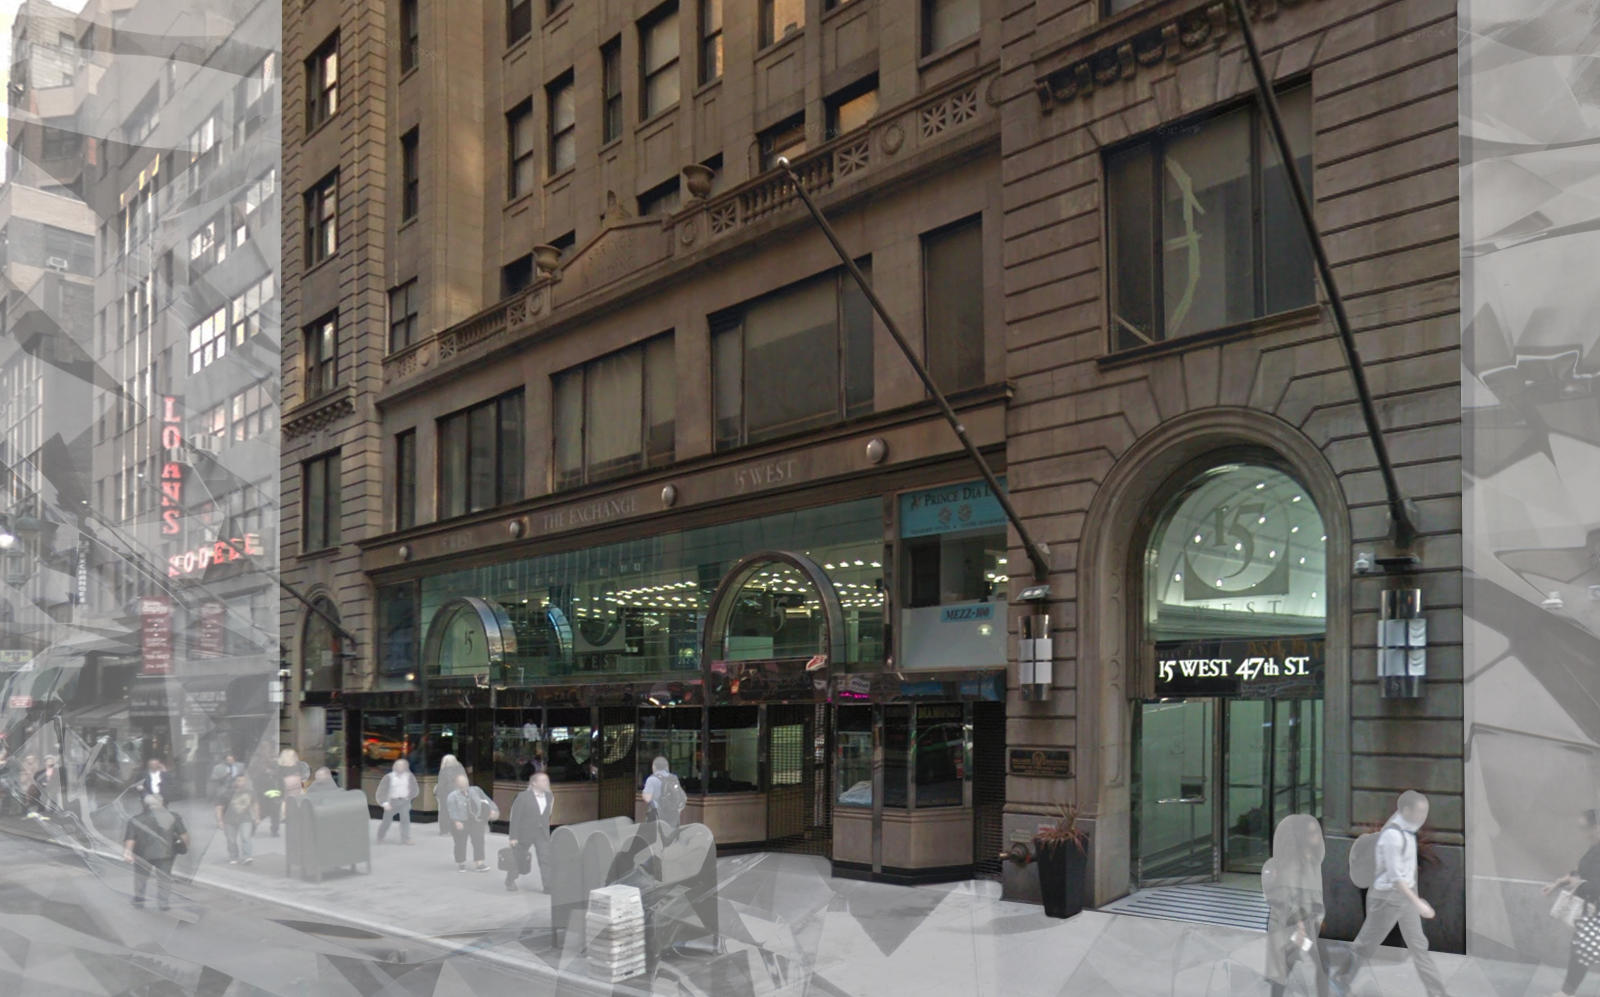 15 West 47th Street, Diamond District (Google Maps, iStock)